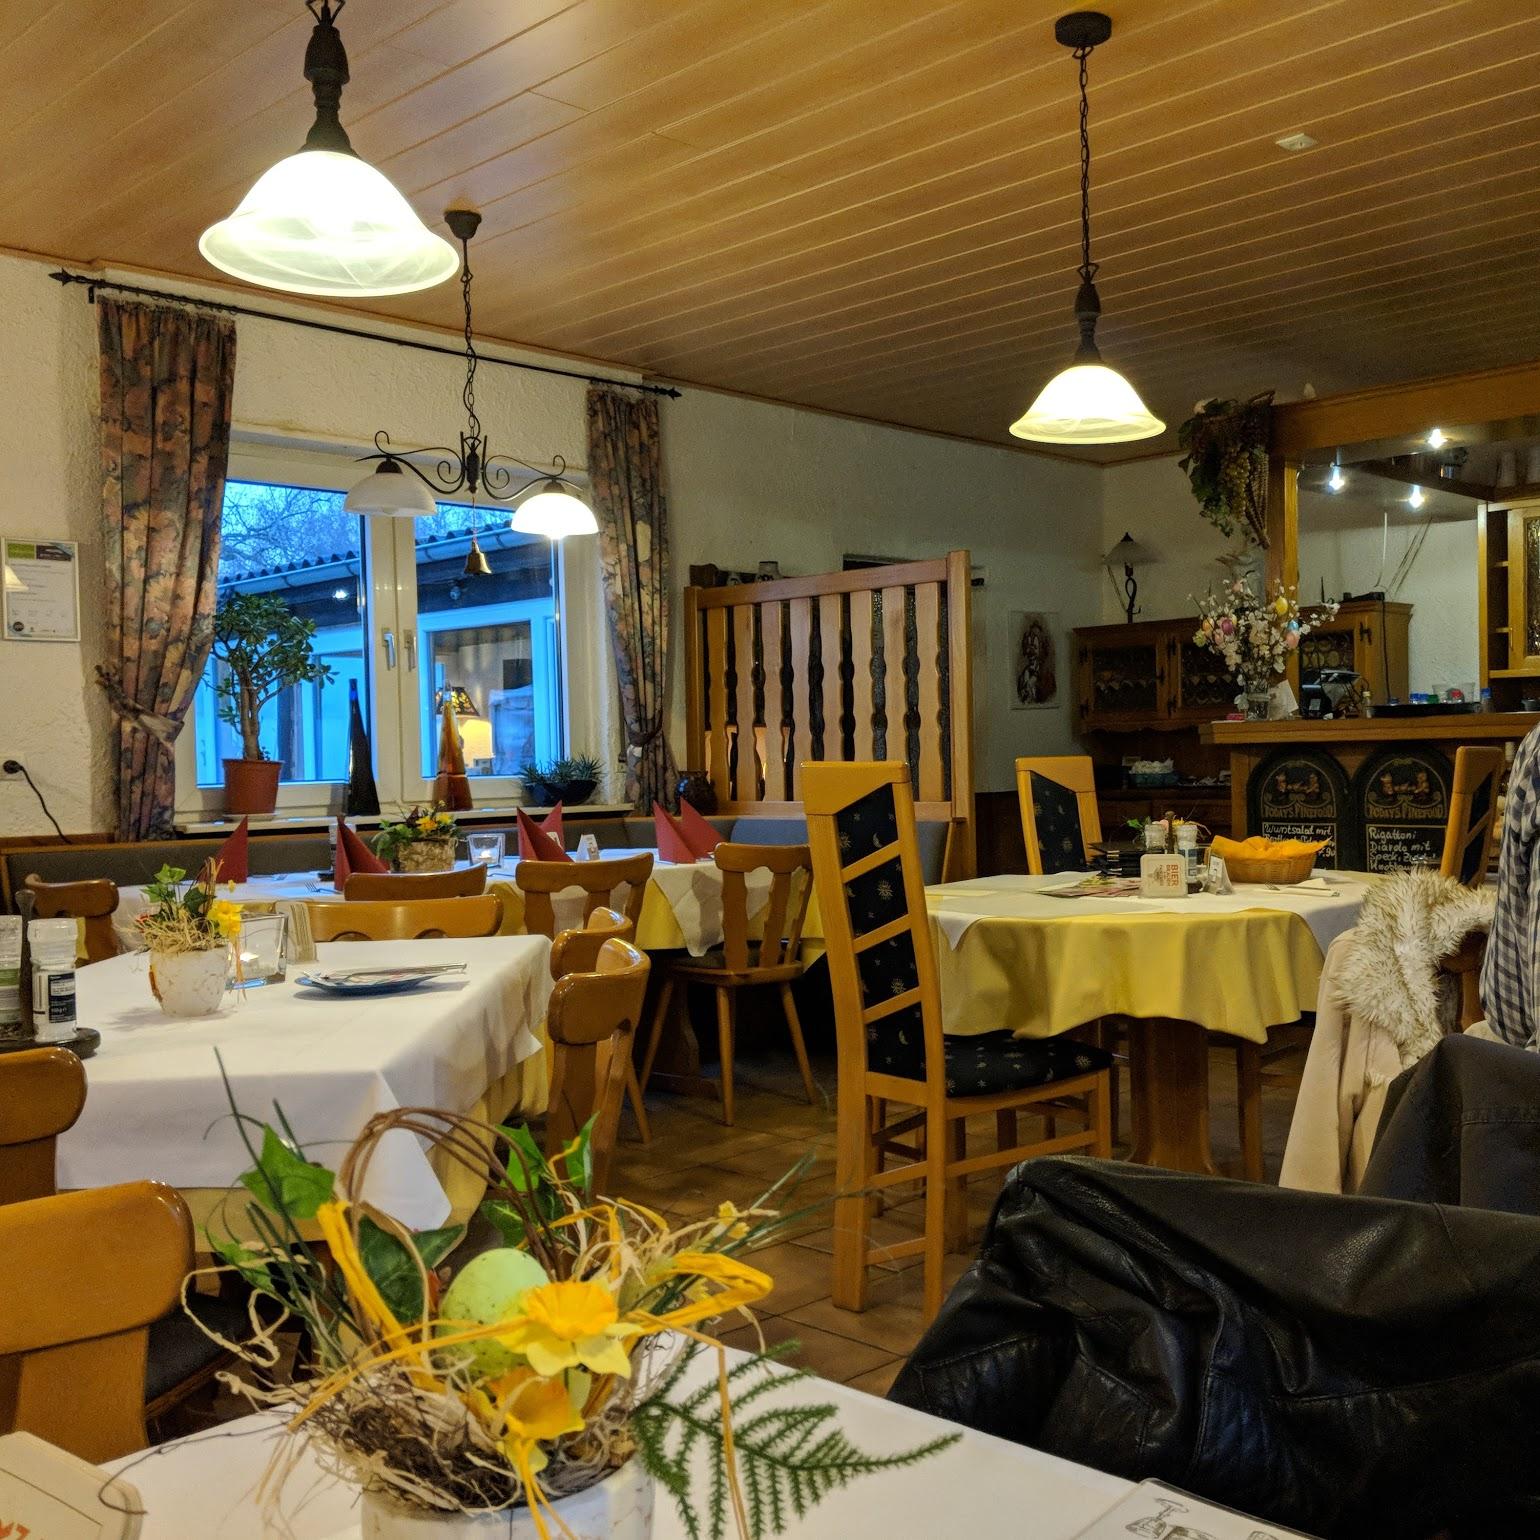 Restaurant "Gaststätte ASV-" in  Birkenheide